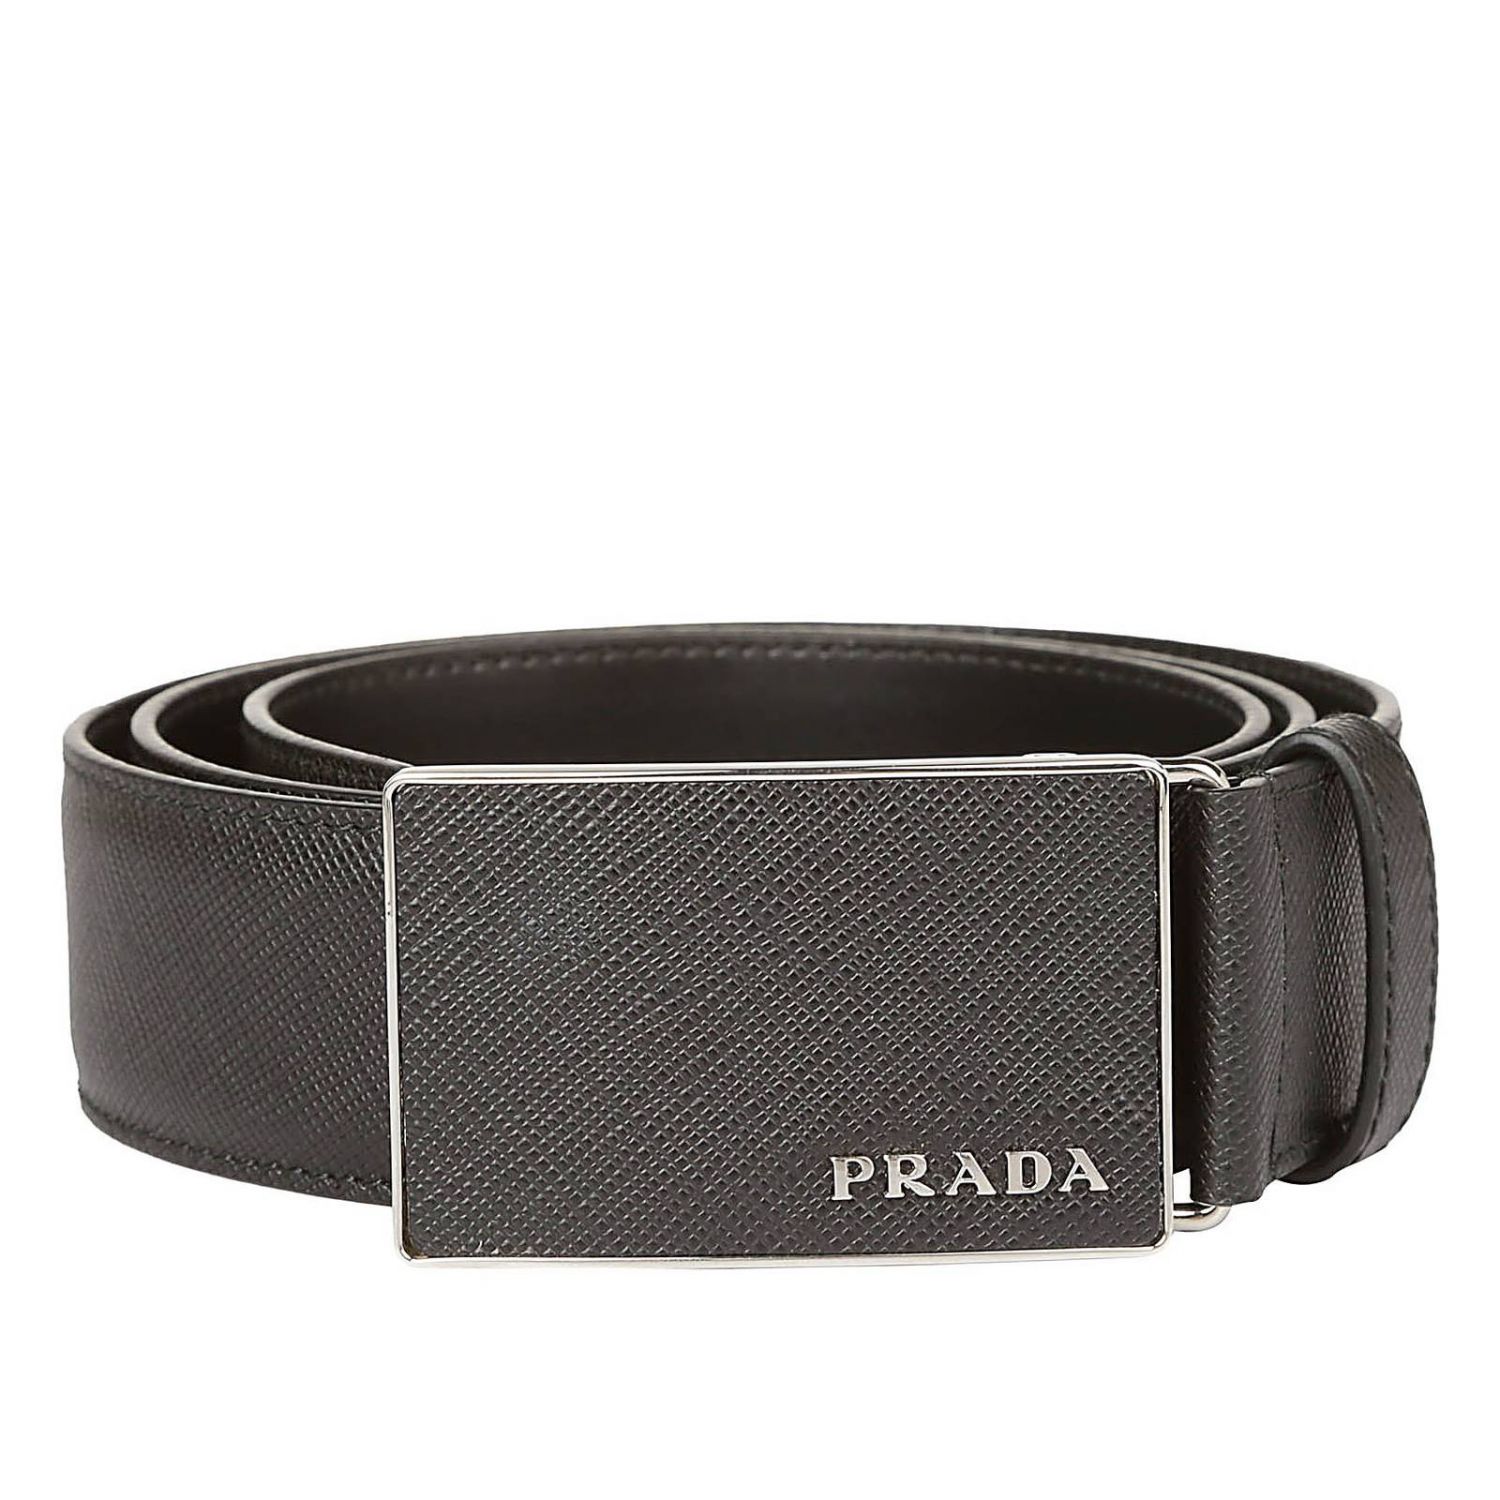 PRADA: Belt men | Belt Prada Men Black | Belt Prada 2CM188 053 Giglio EN